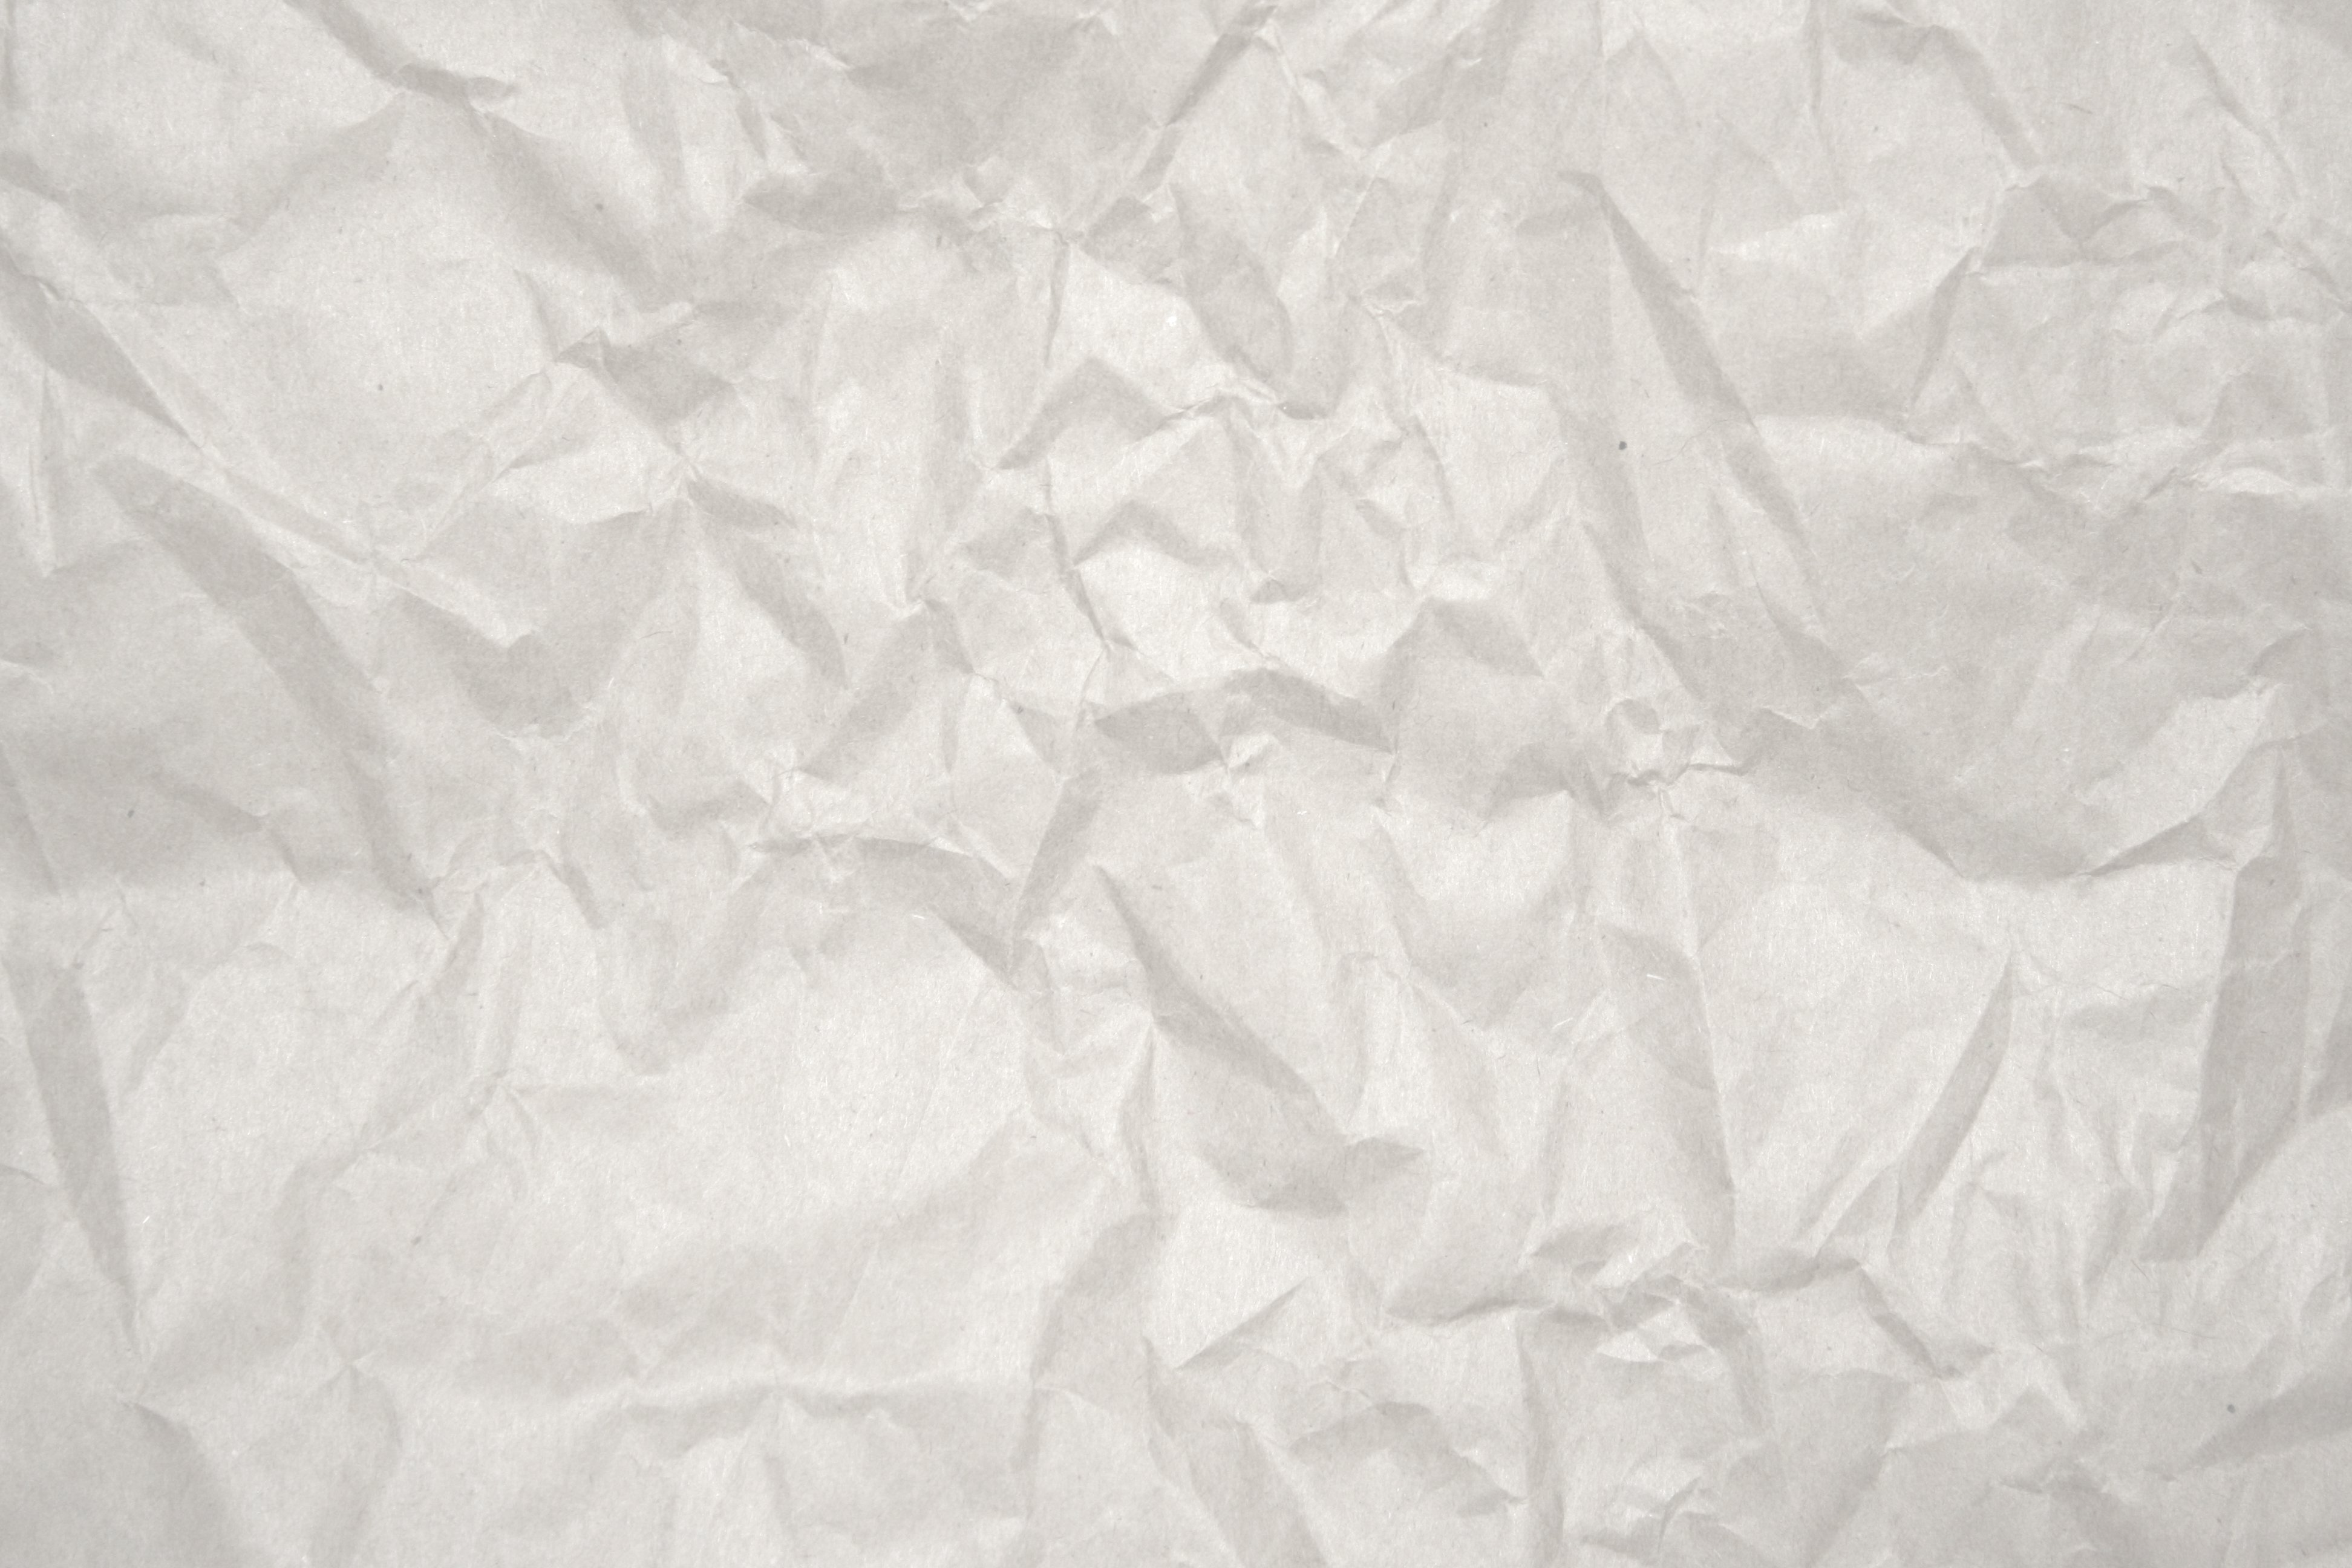 Crumpled White Paper Texture Picture Free Photograph Photos Public Domain